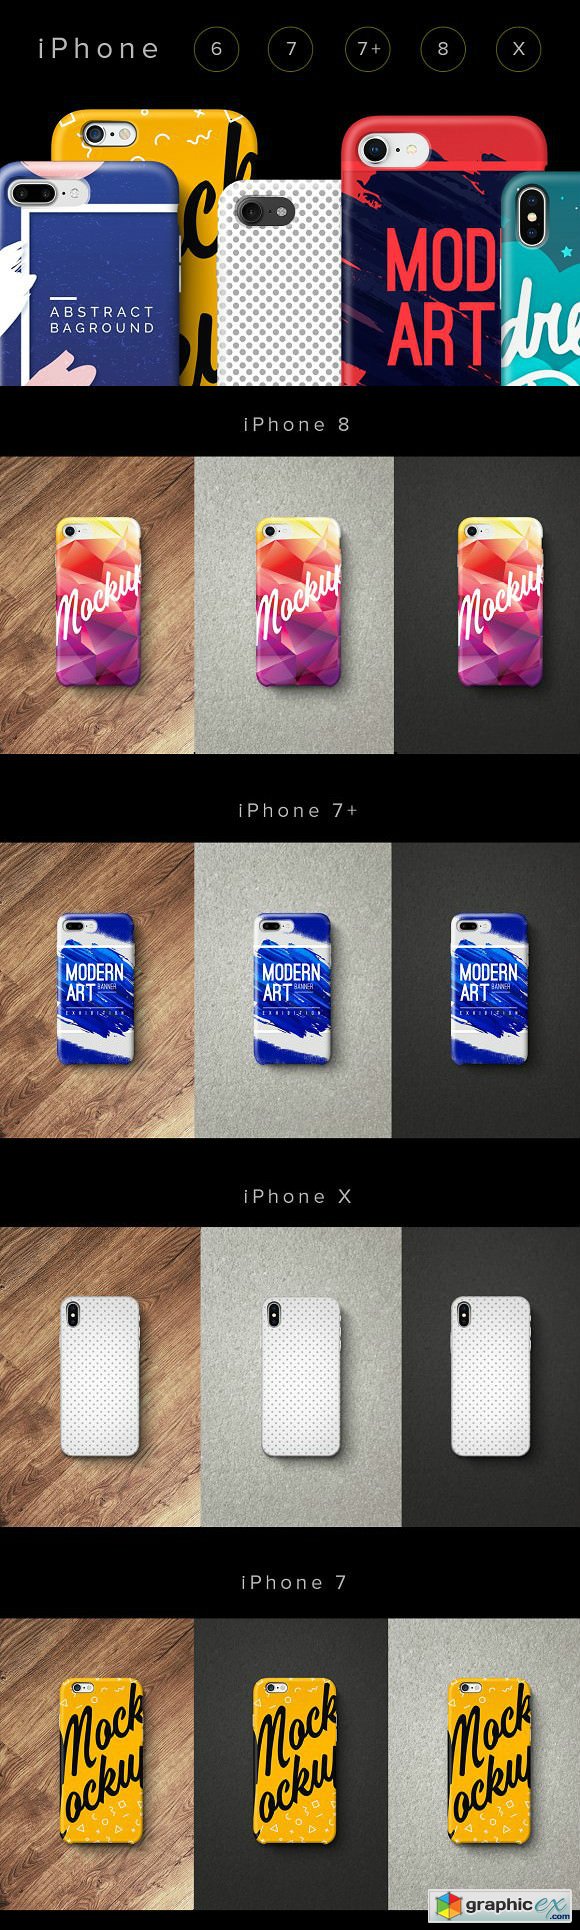 ases iPhone 6, 7, 7plus, 8, X Set